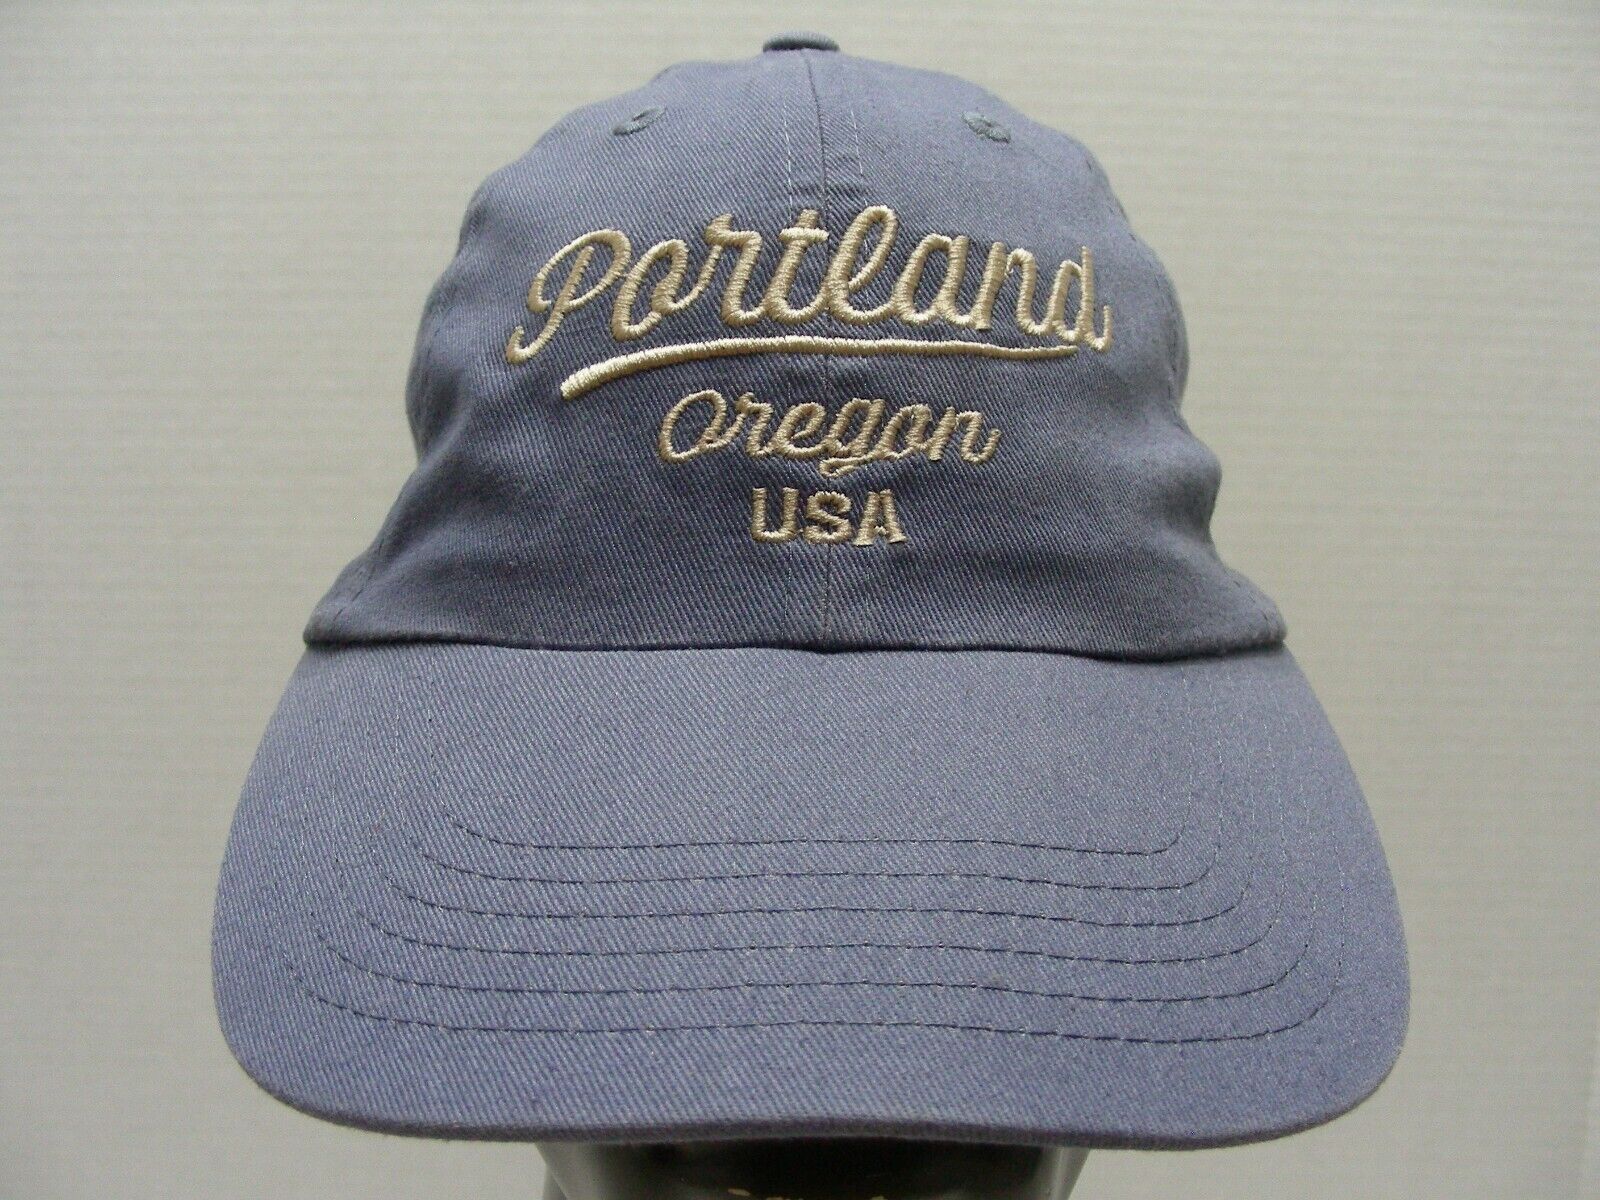 PORTLAND, OREGON USA - Youth or Adult S/M Size Adjustable Baseball Cap Hat